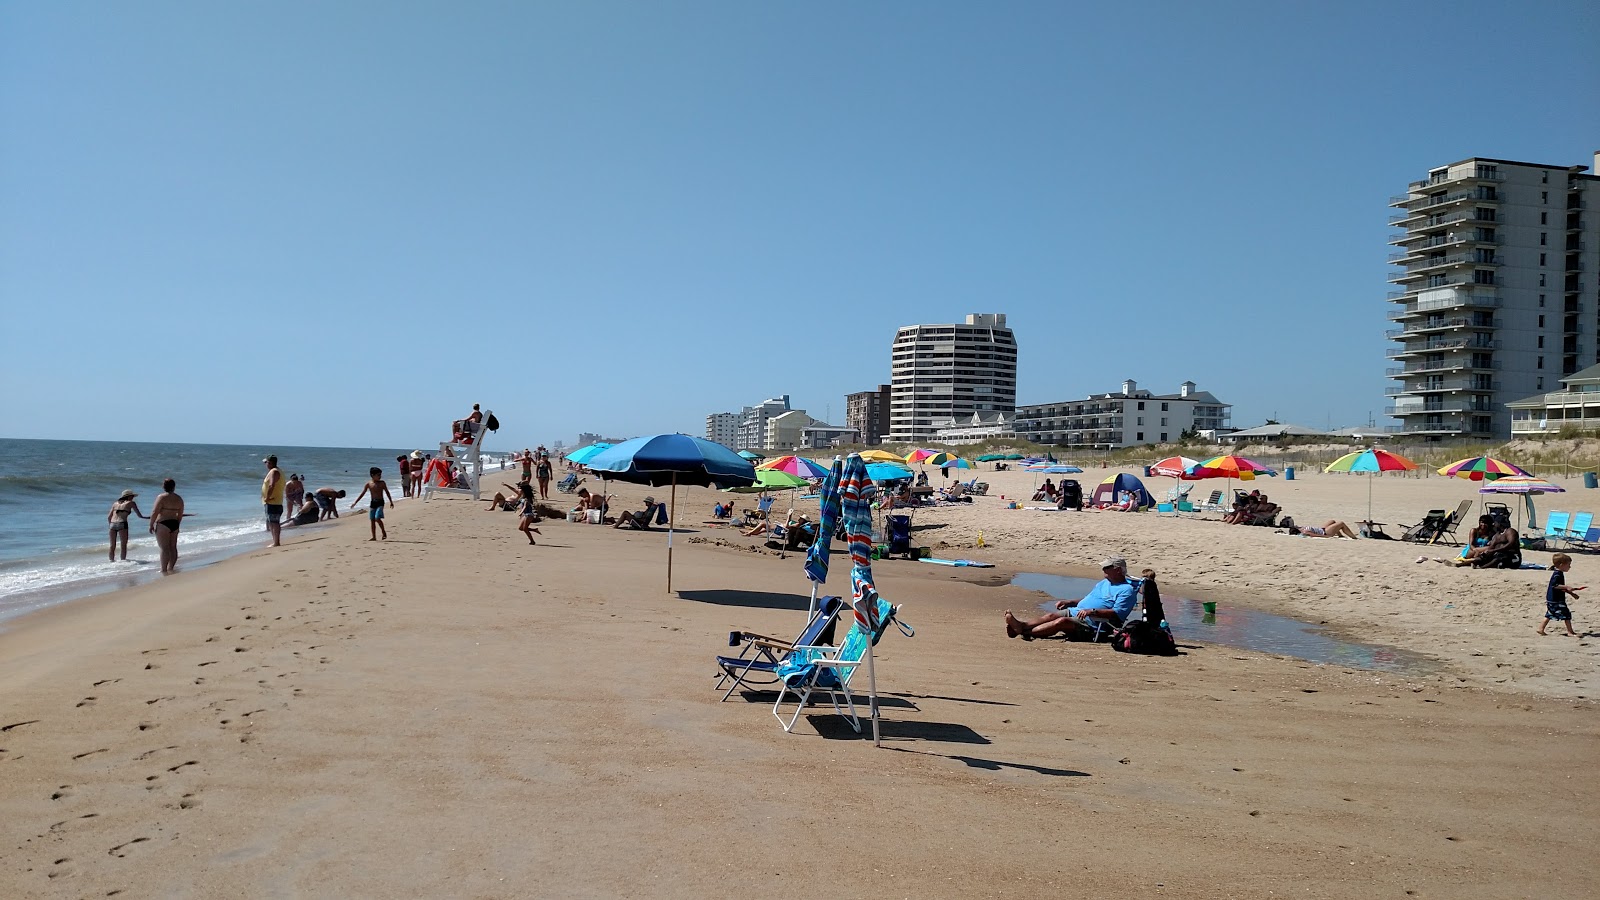 Foto de Ocean City beach II - lugar popular entre os apreciadores de relaxamento